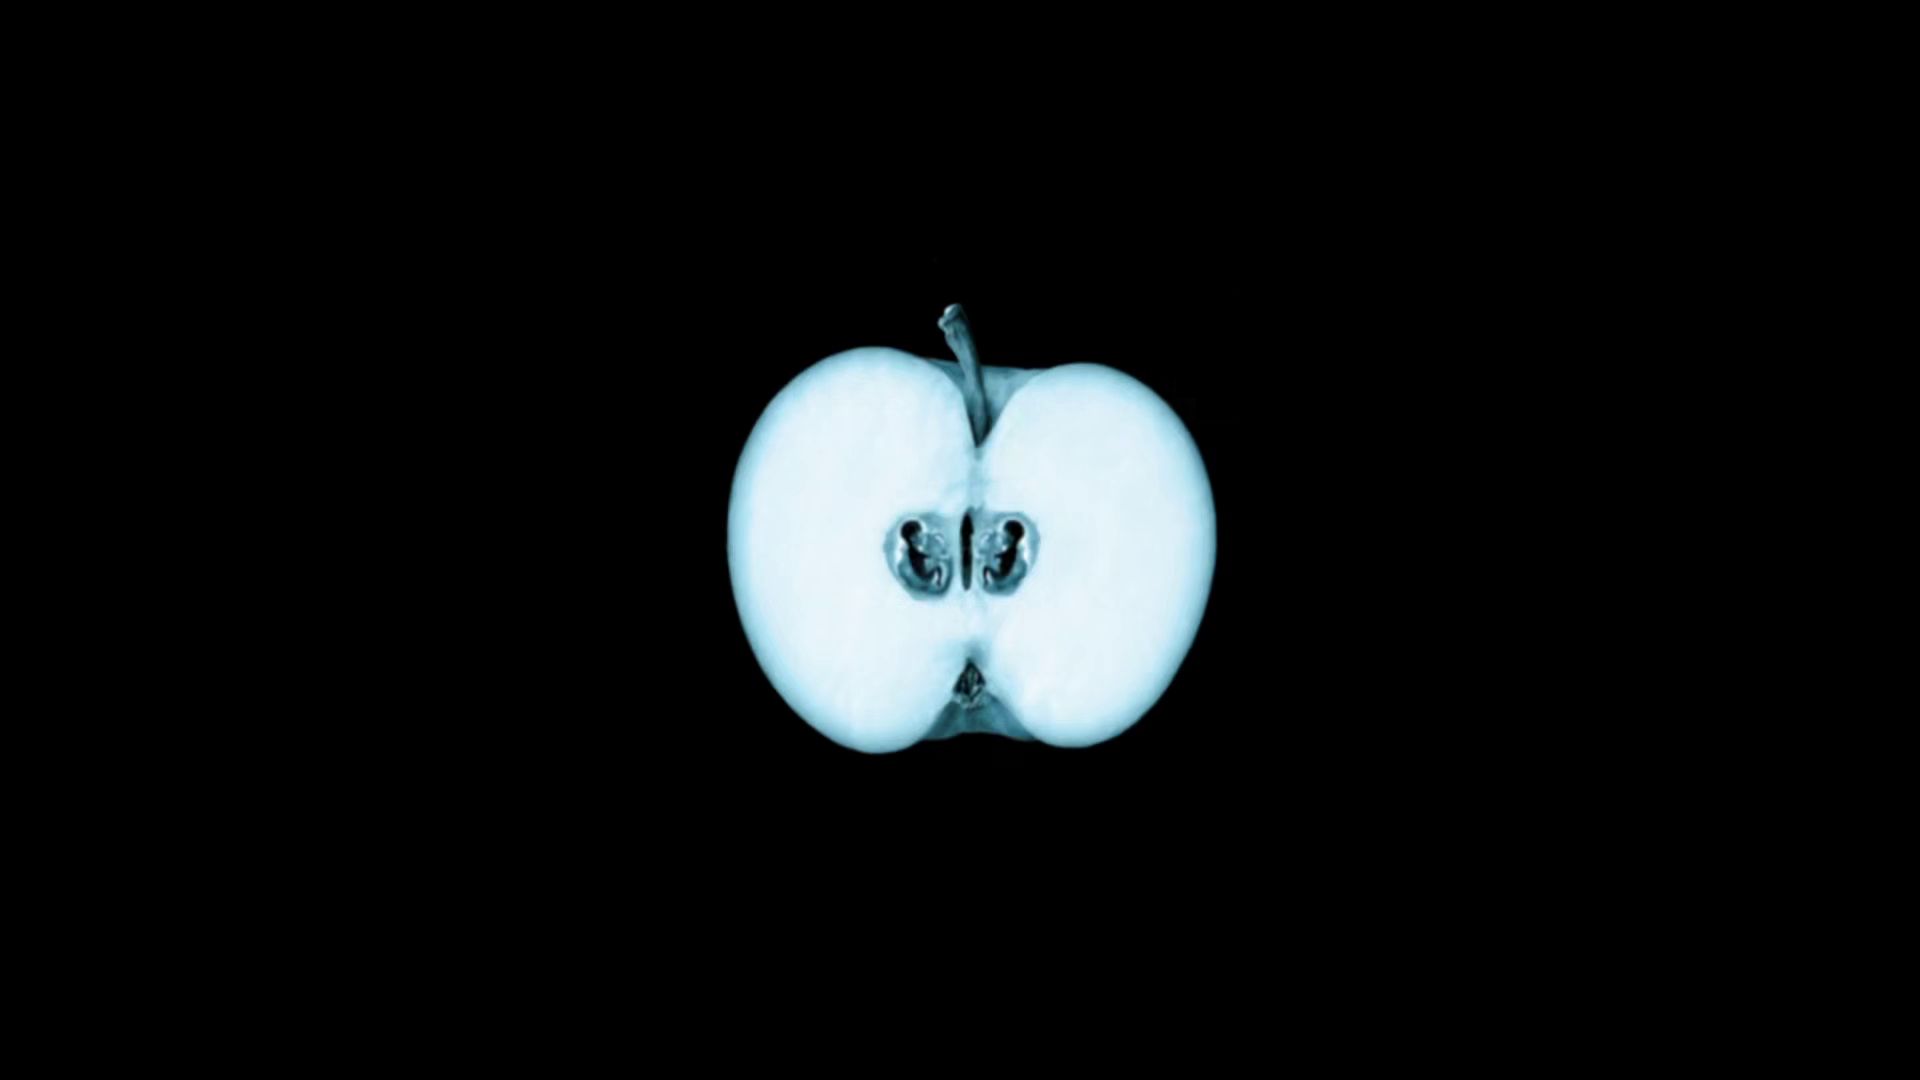 Original glyph: Apple